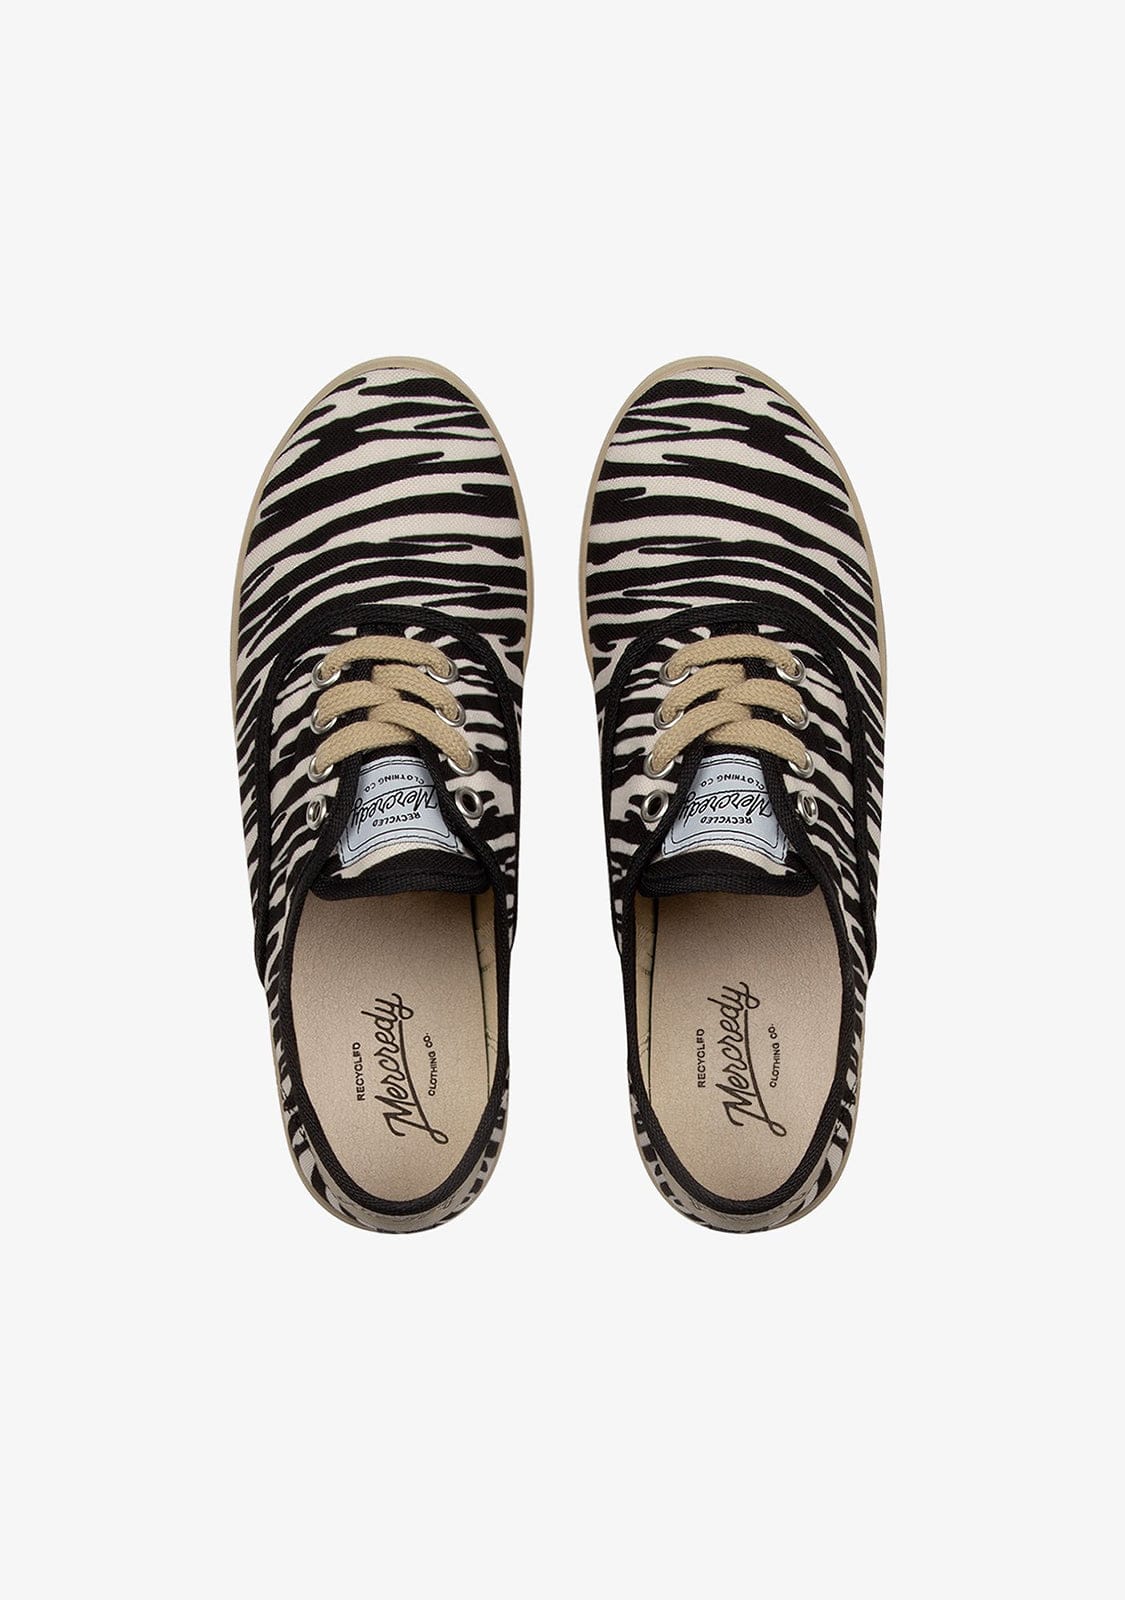 MERCREDY Shoes Zebra Ecological Sneakers Mercredy